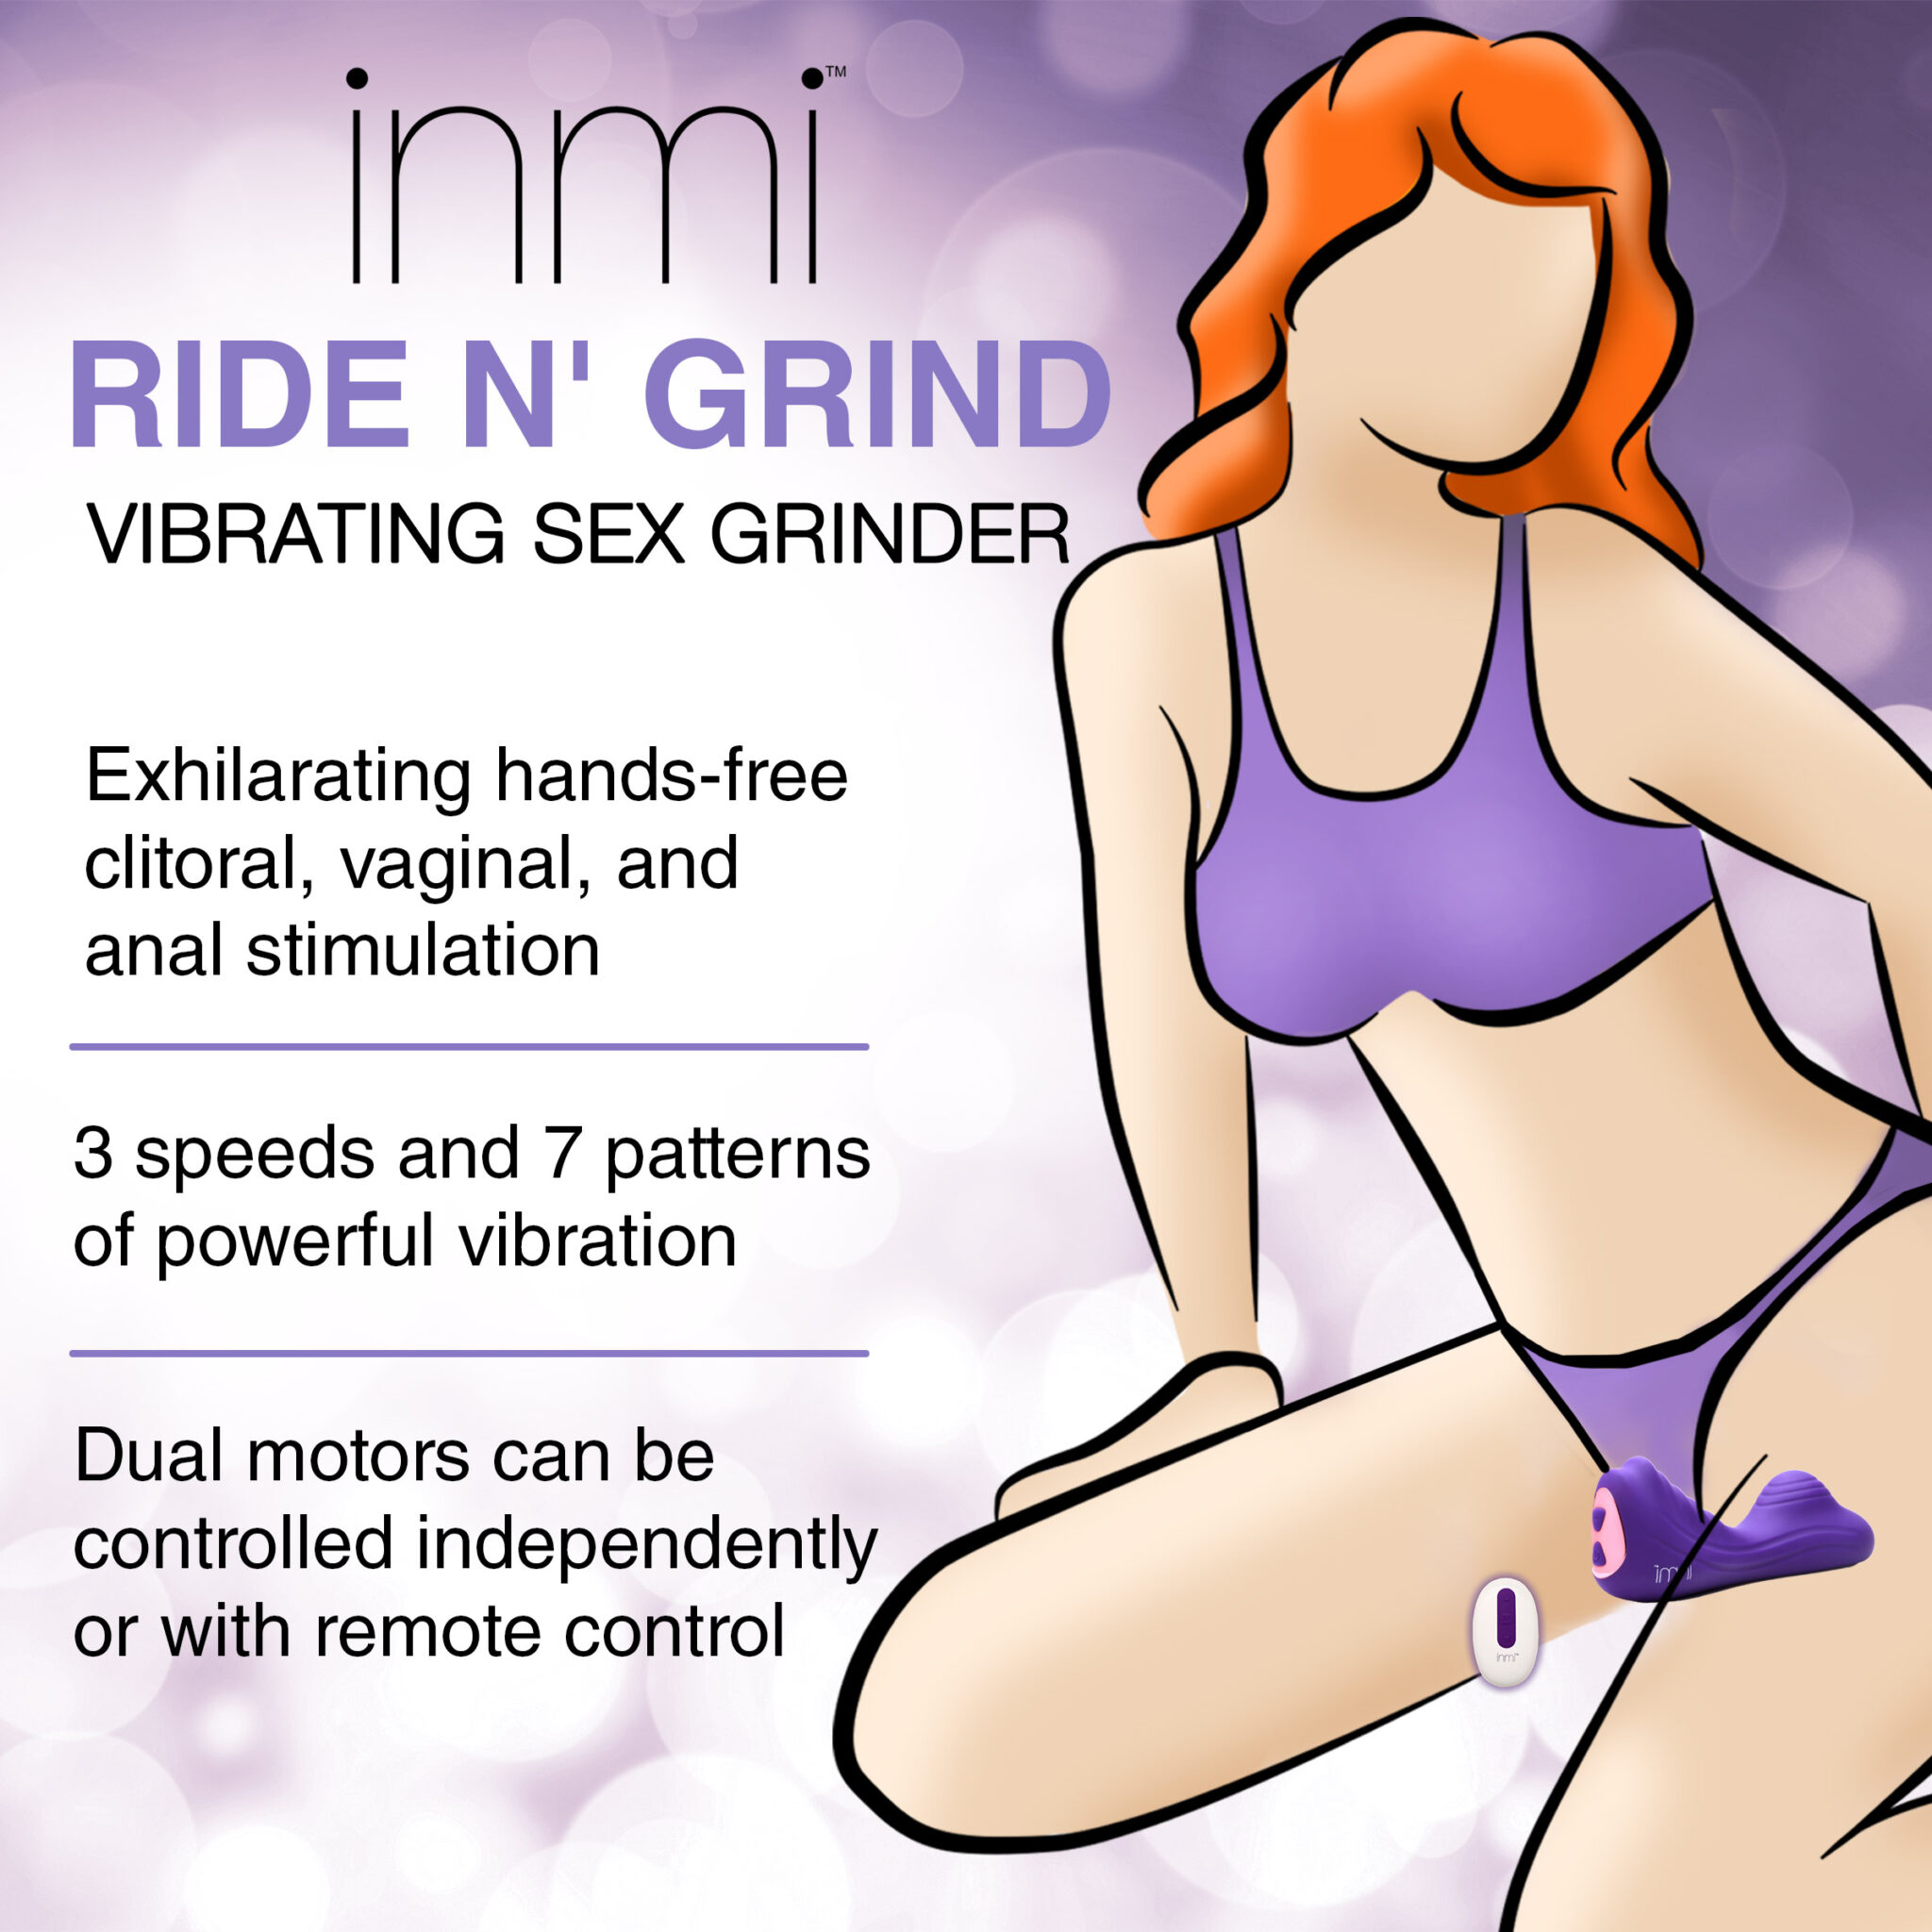 Ride n’ Grind 10 X Vibrating Silicone Sex Grinder